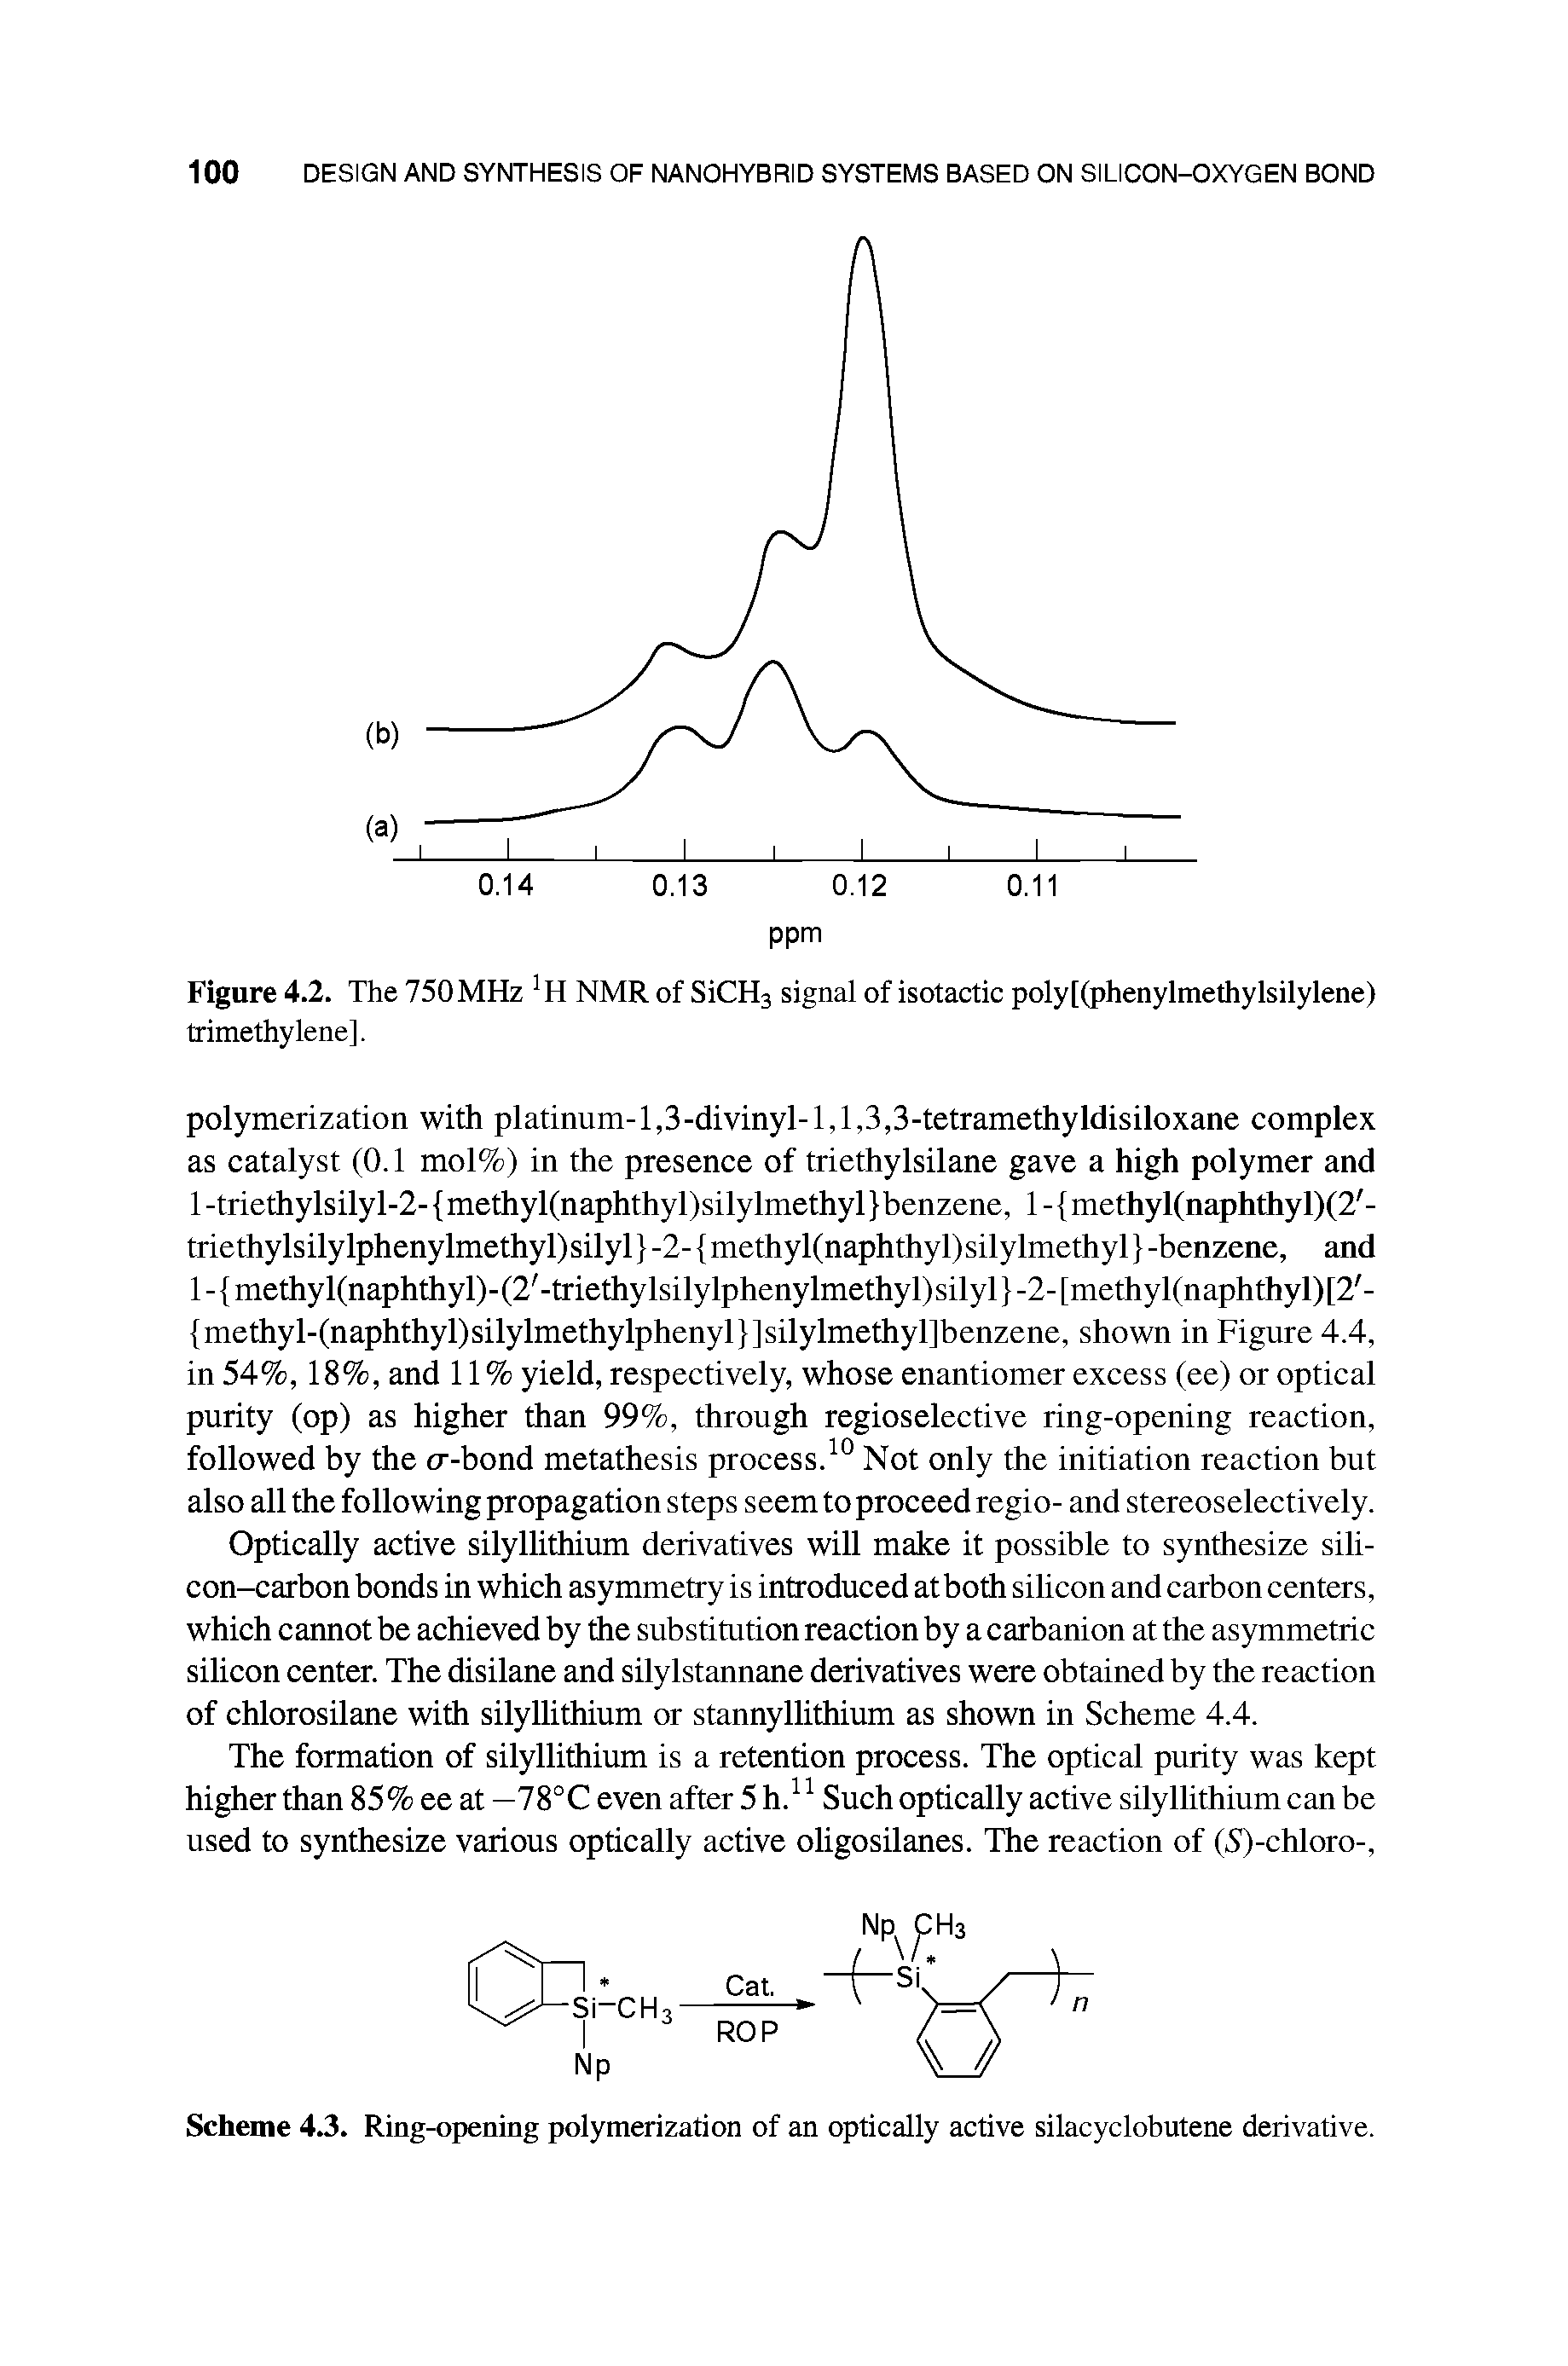 Figure 4.2. The 750MHz H NMR of SiCH3 signal of isotactic poly[(phenylmethylsilylene) trimethylene].